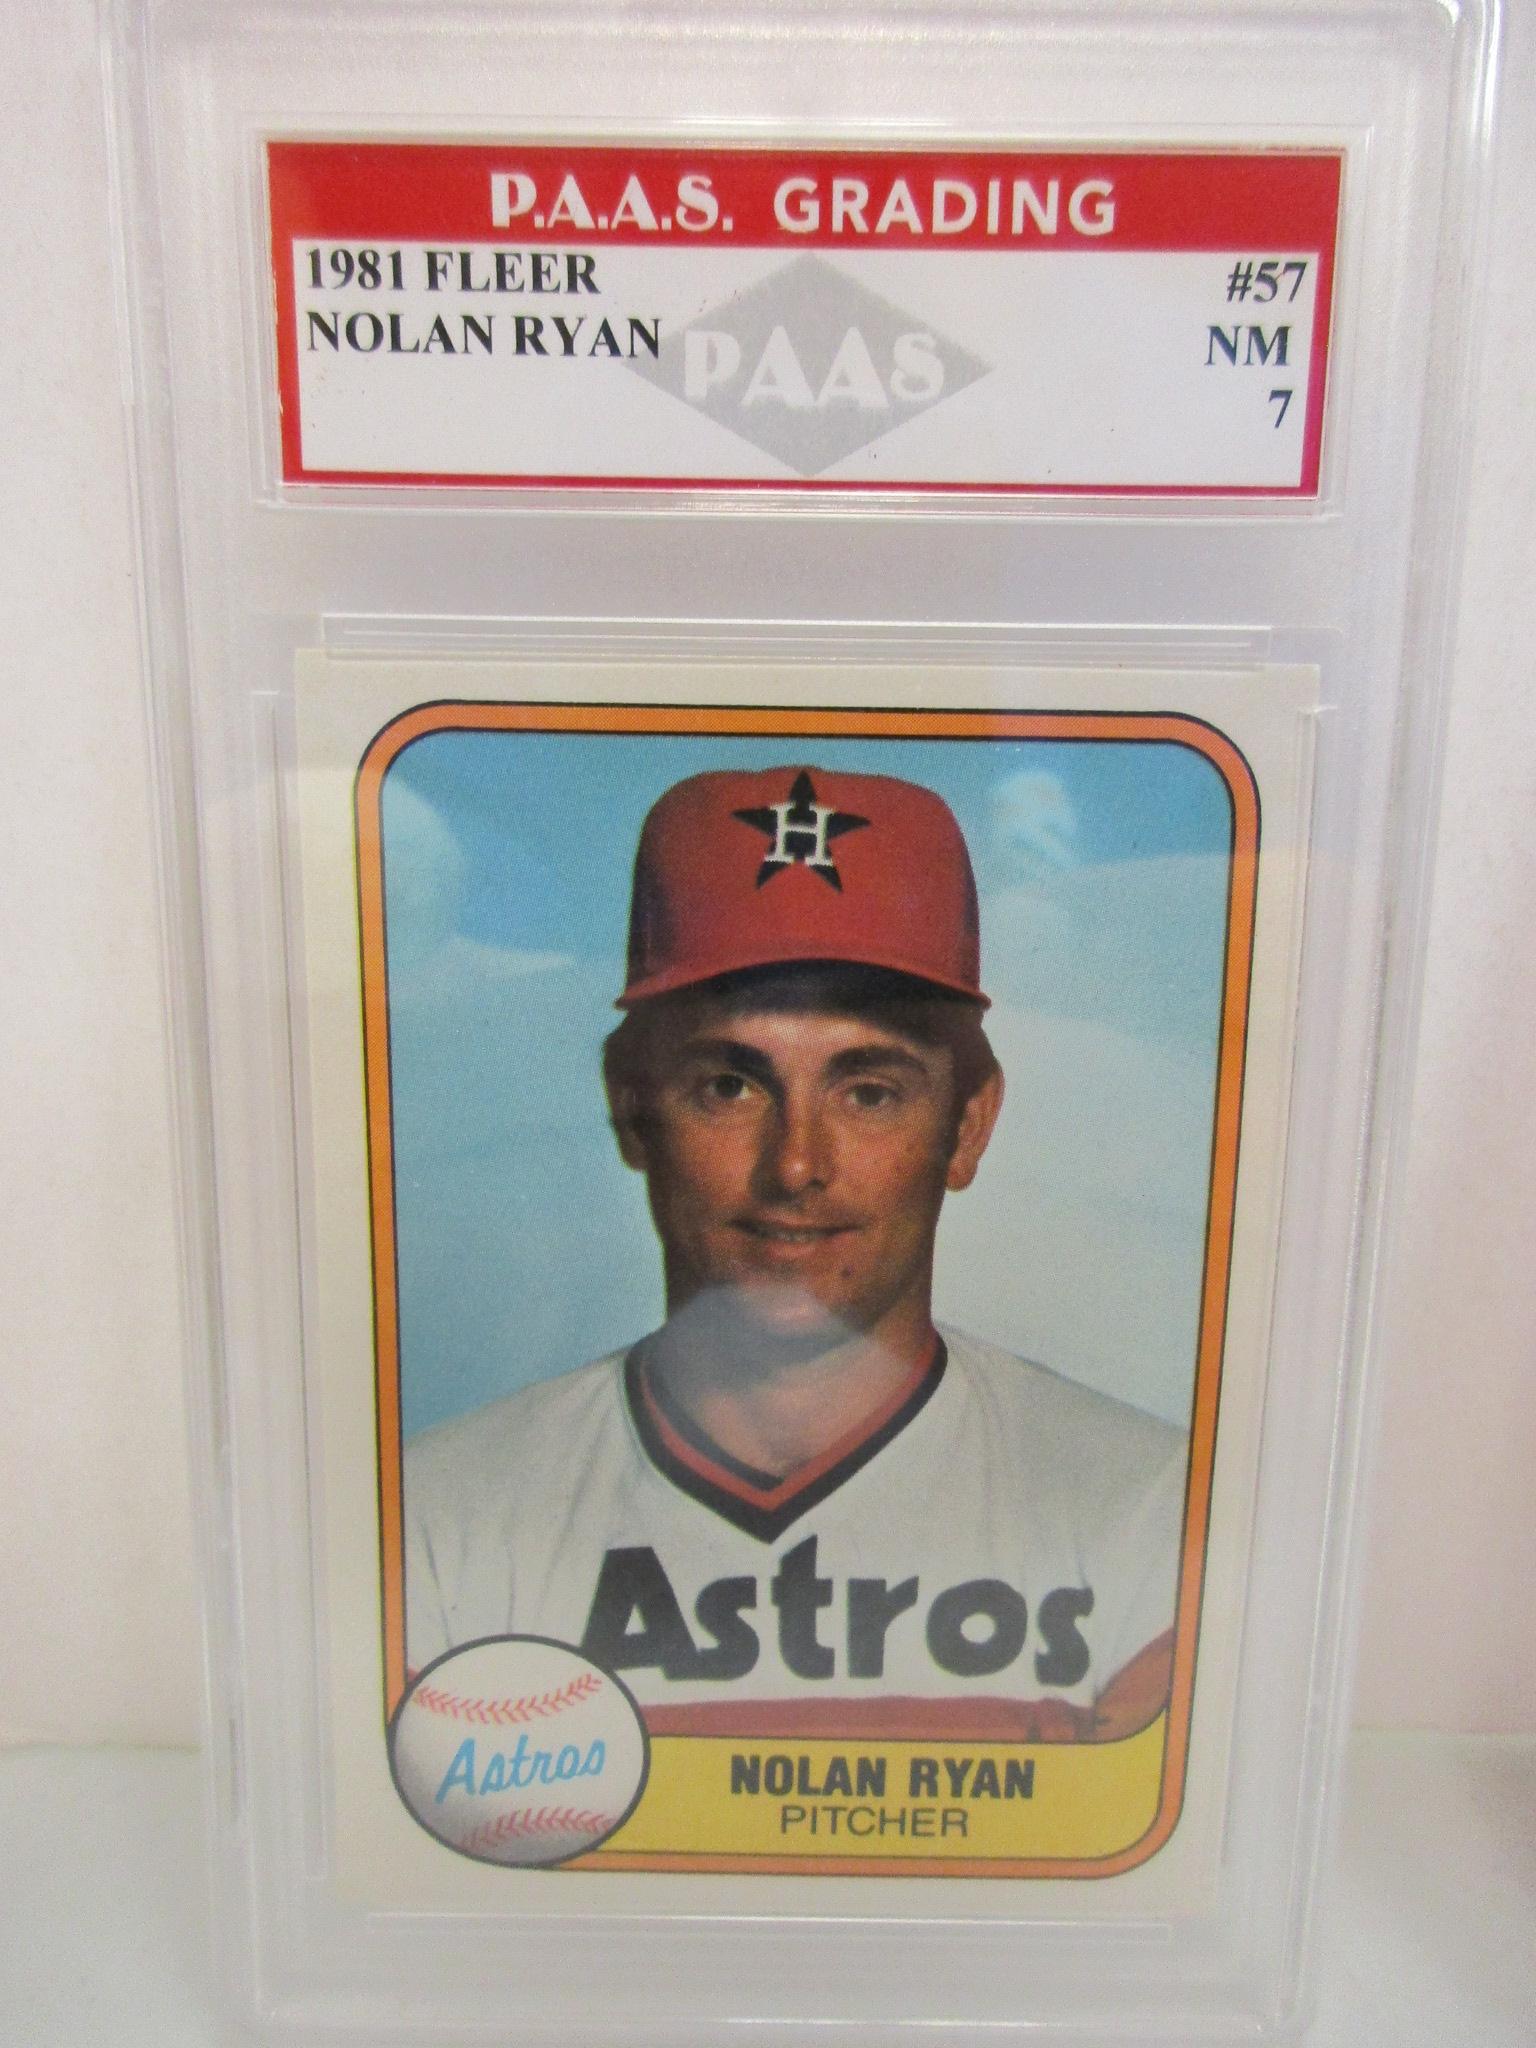 Nolan Ryan Houston Astros 1981 Fleer #57 graded PAAS NM 7